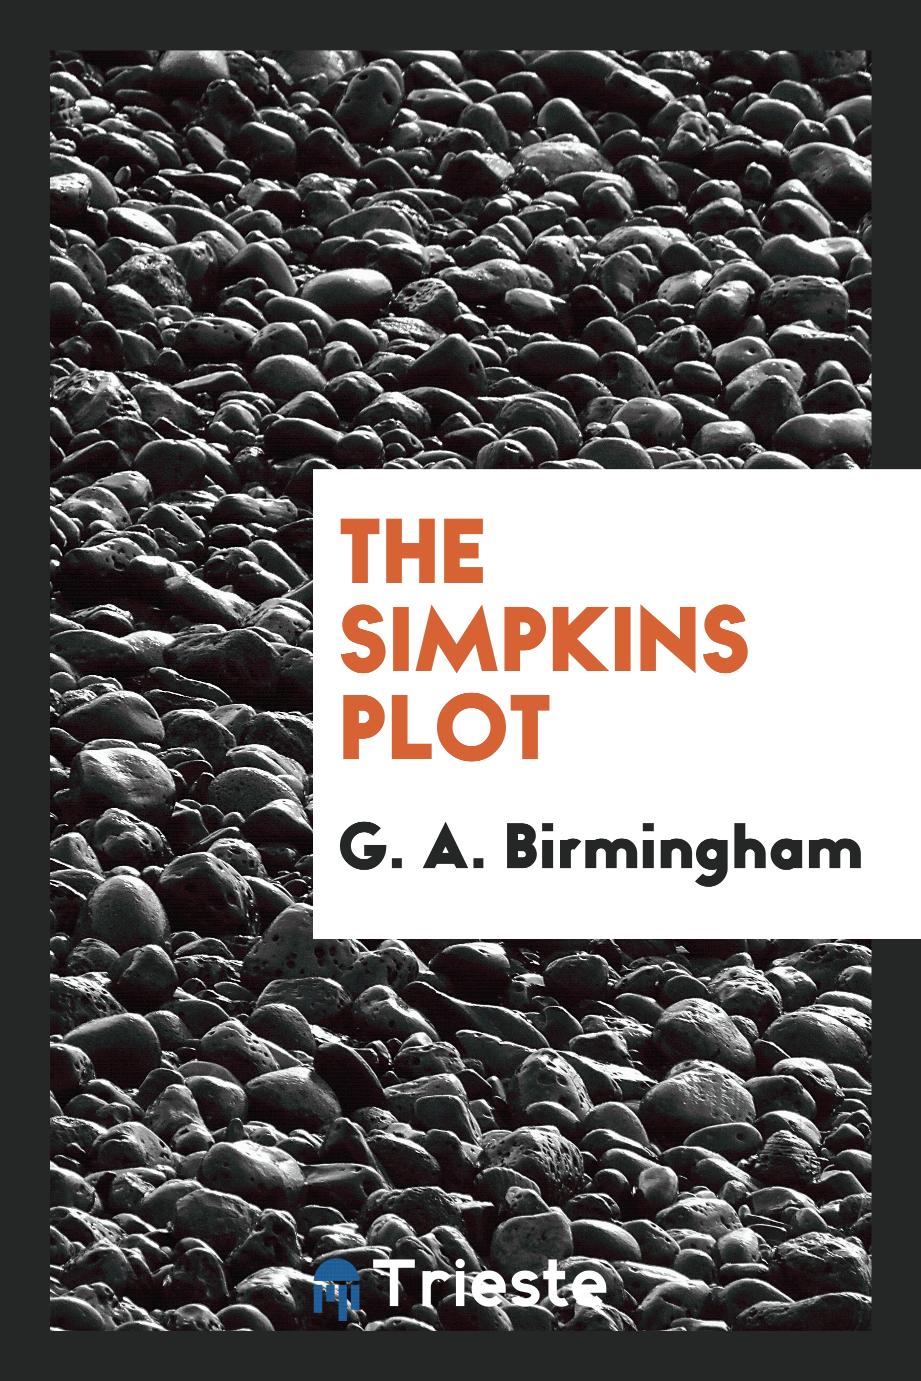 The Simpkins plot